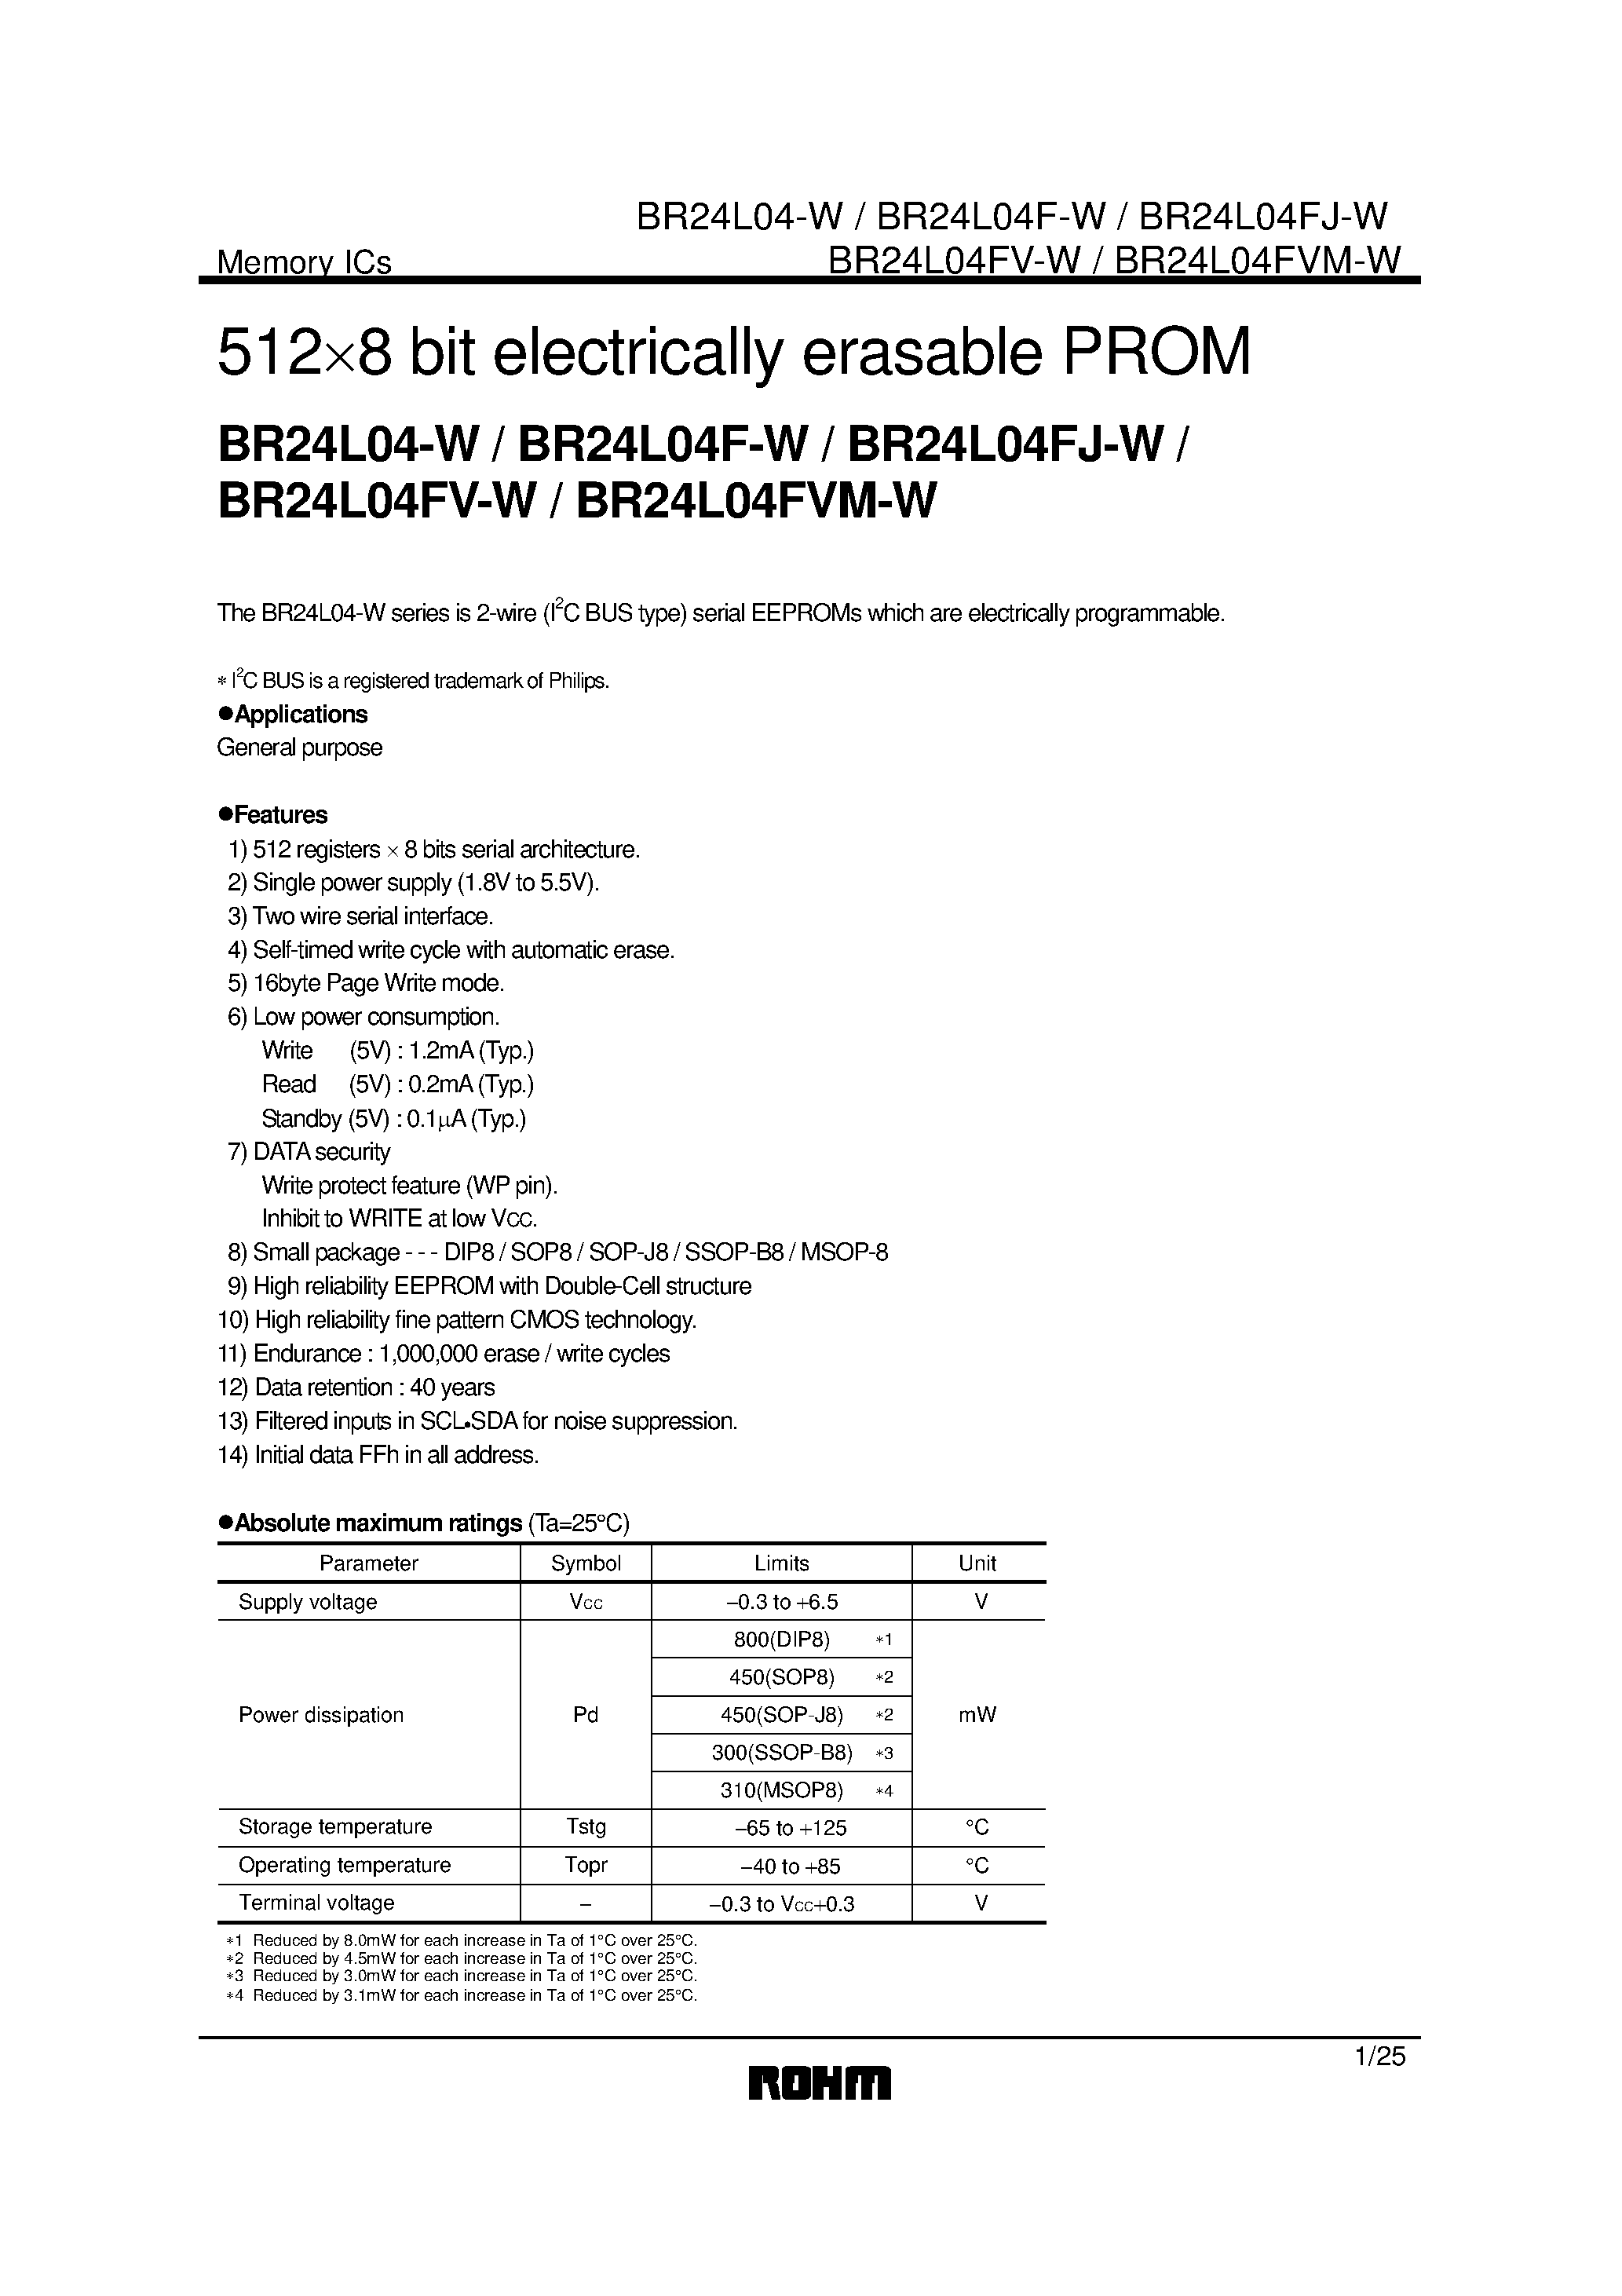 Datasheet BR24L04FVM-W - 5128 bit electrically erasable PROM page 1